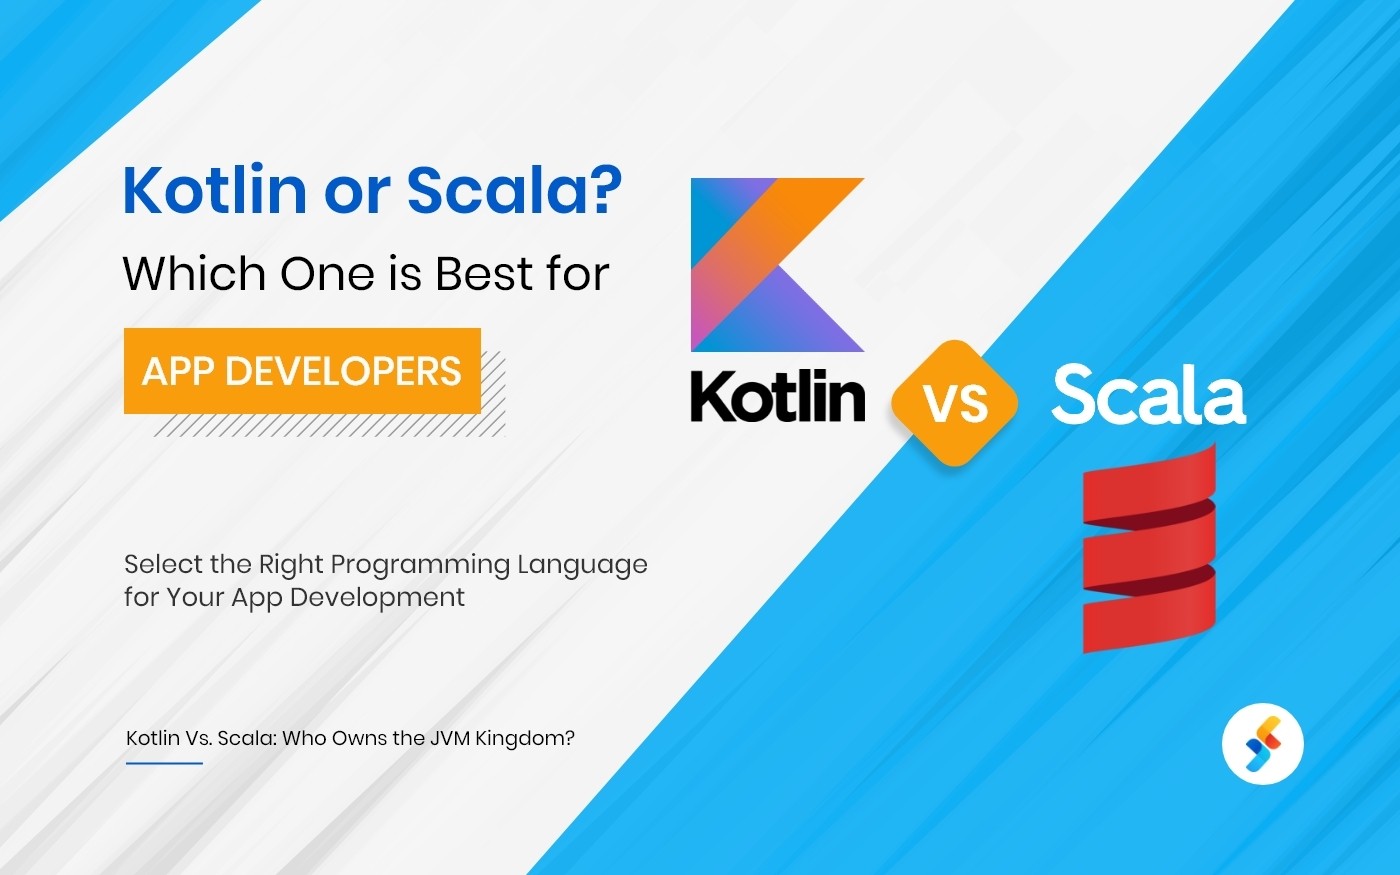 Kotlin Vs. Scala: The Right JVM Language For App Developers